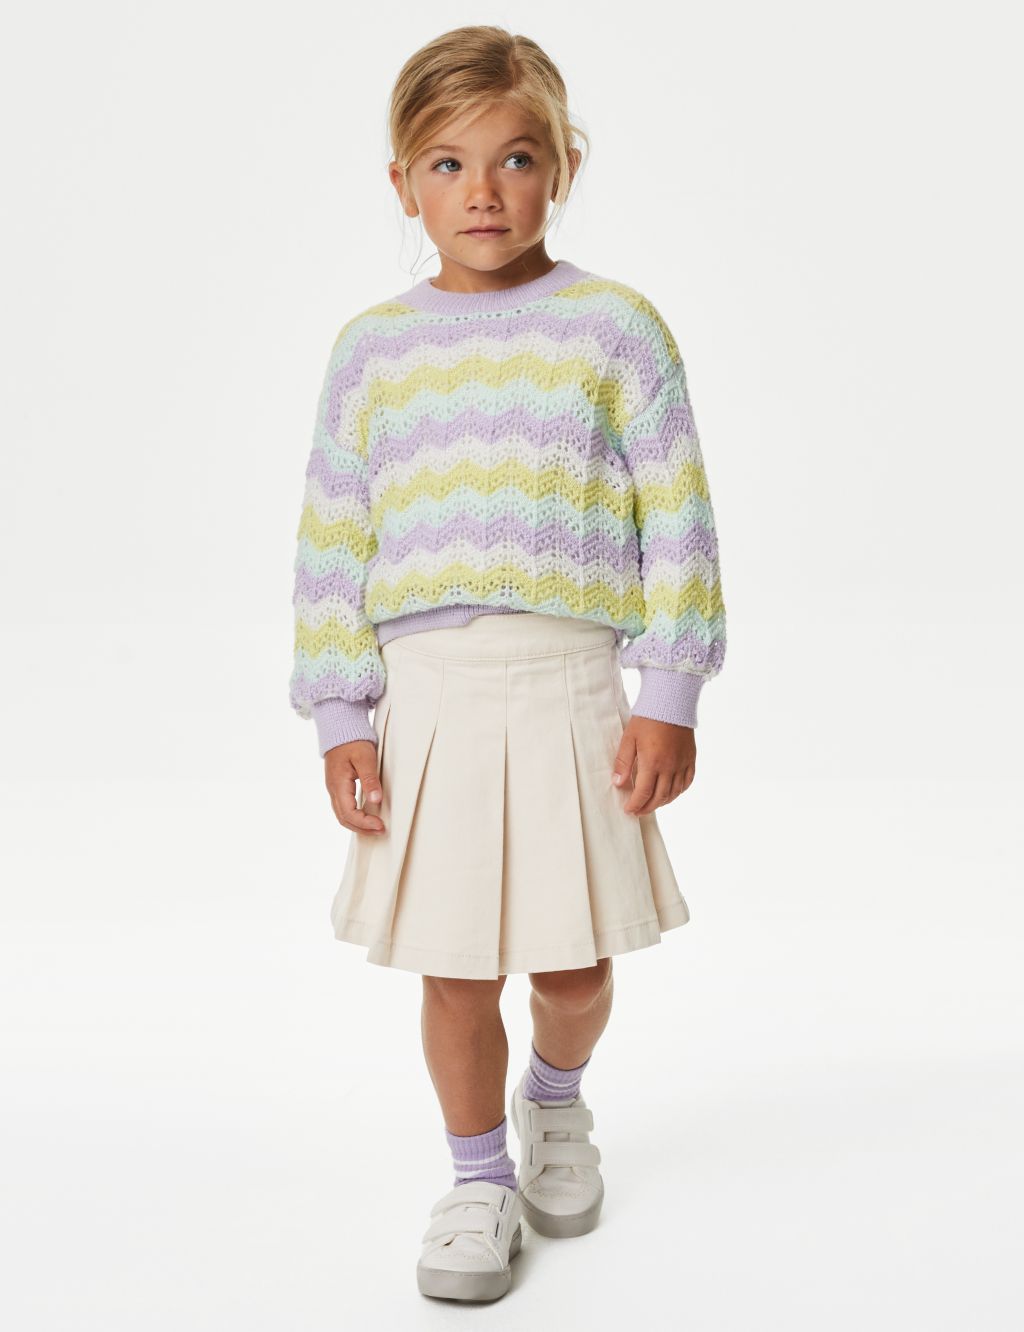 Pure Cotton Skirt (2-8 Yrs)